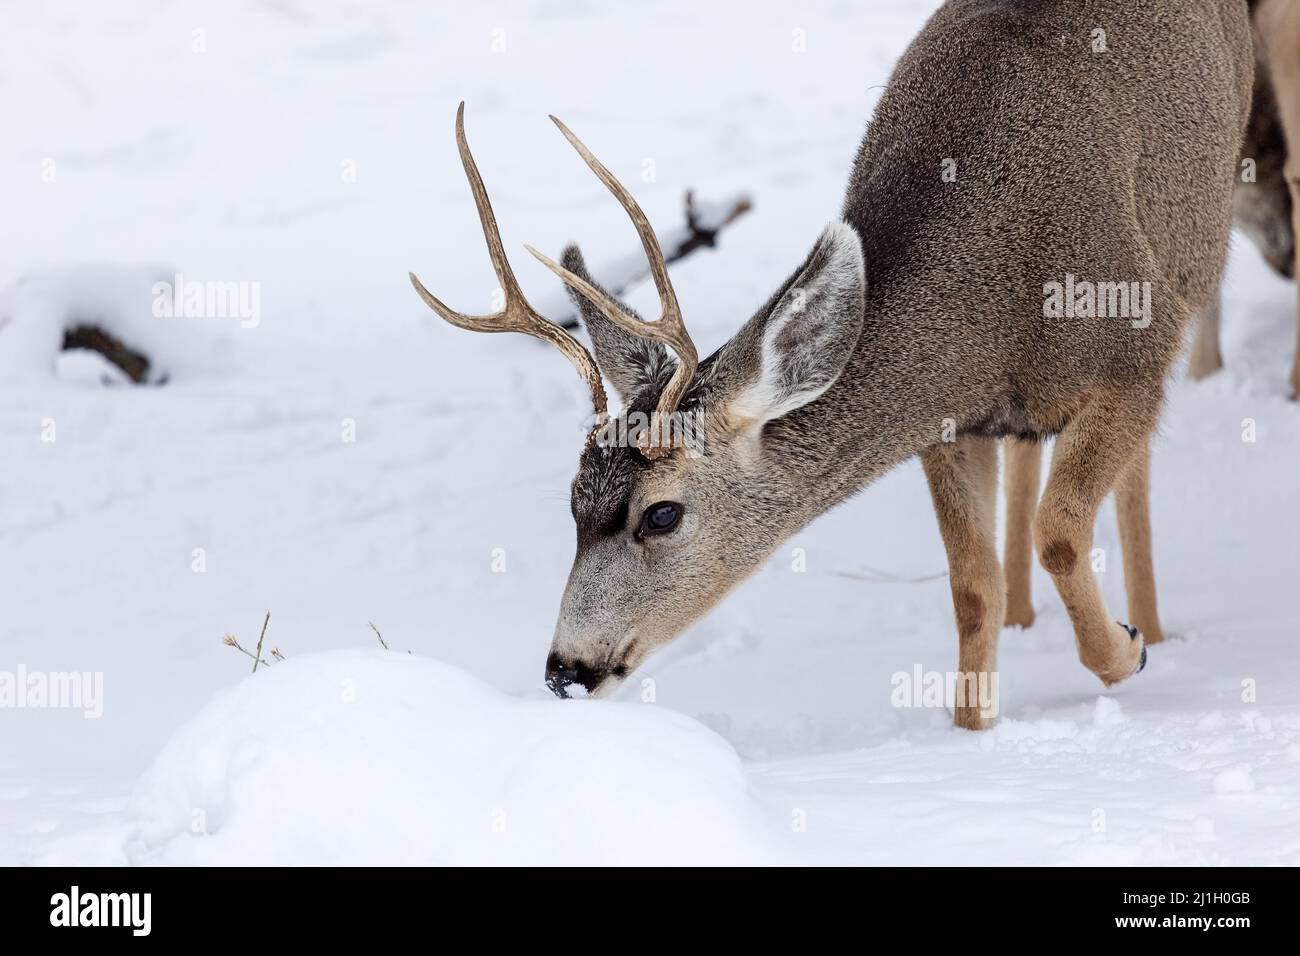 A Mule Deer buck (Odocoileus hemionus) foraging in winter snow in Grand Canyon National Park, Arizona Stock Photo